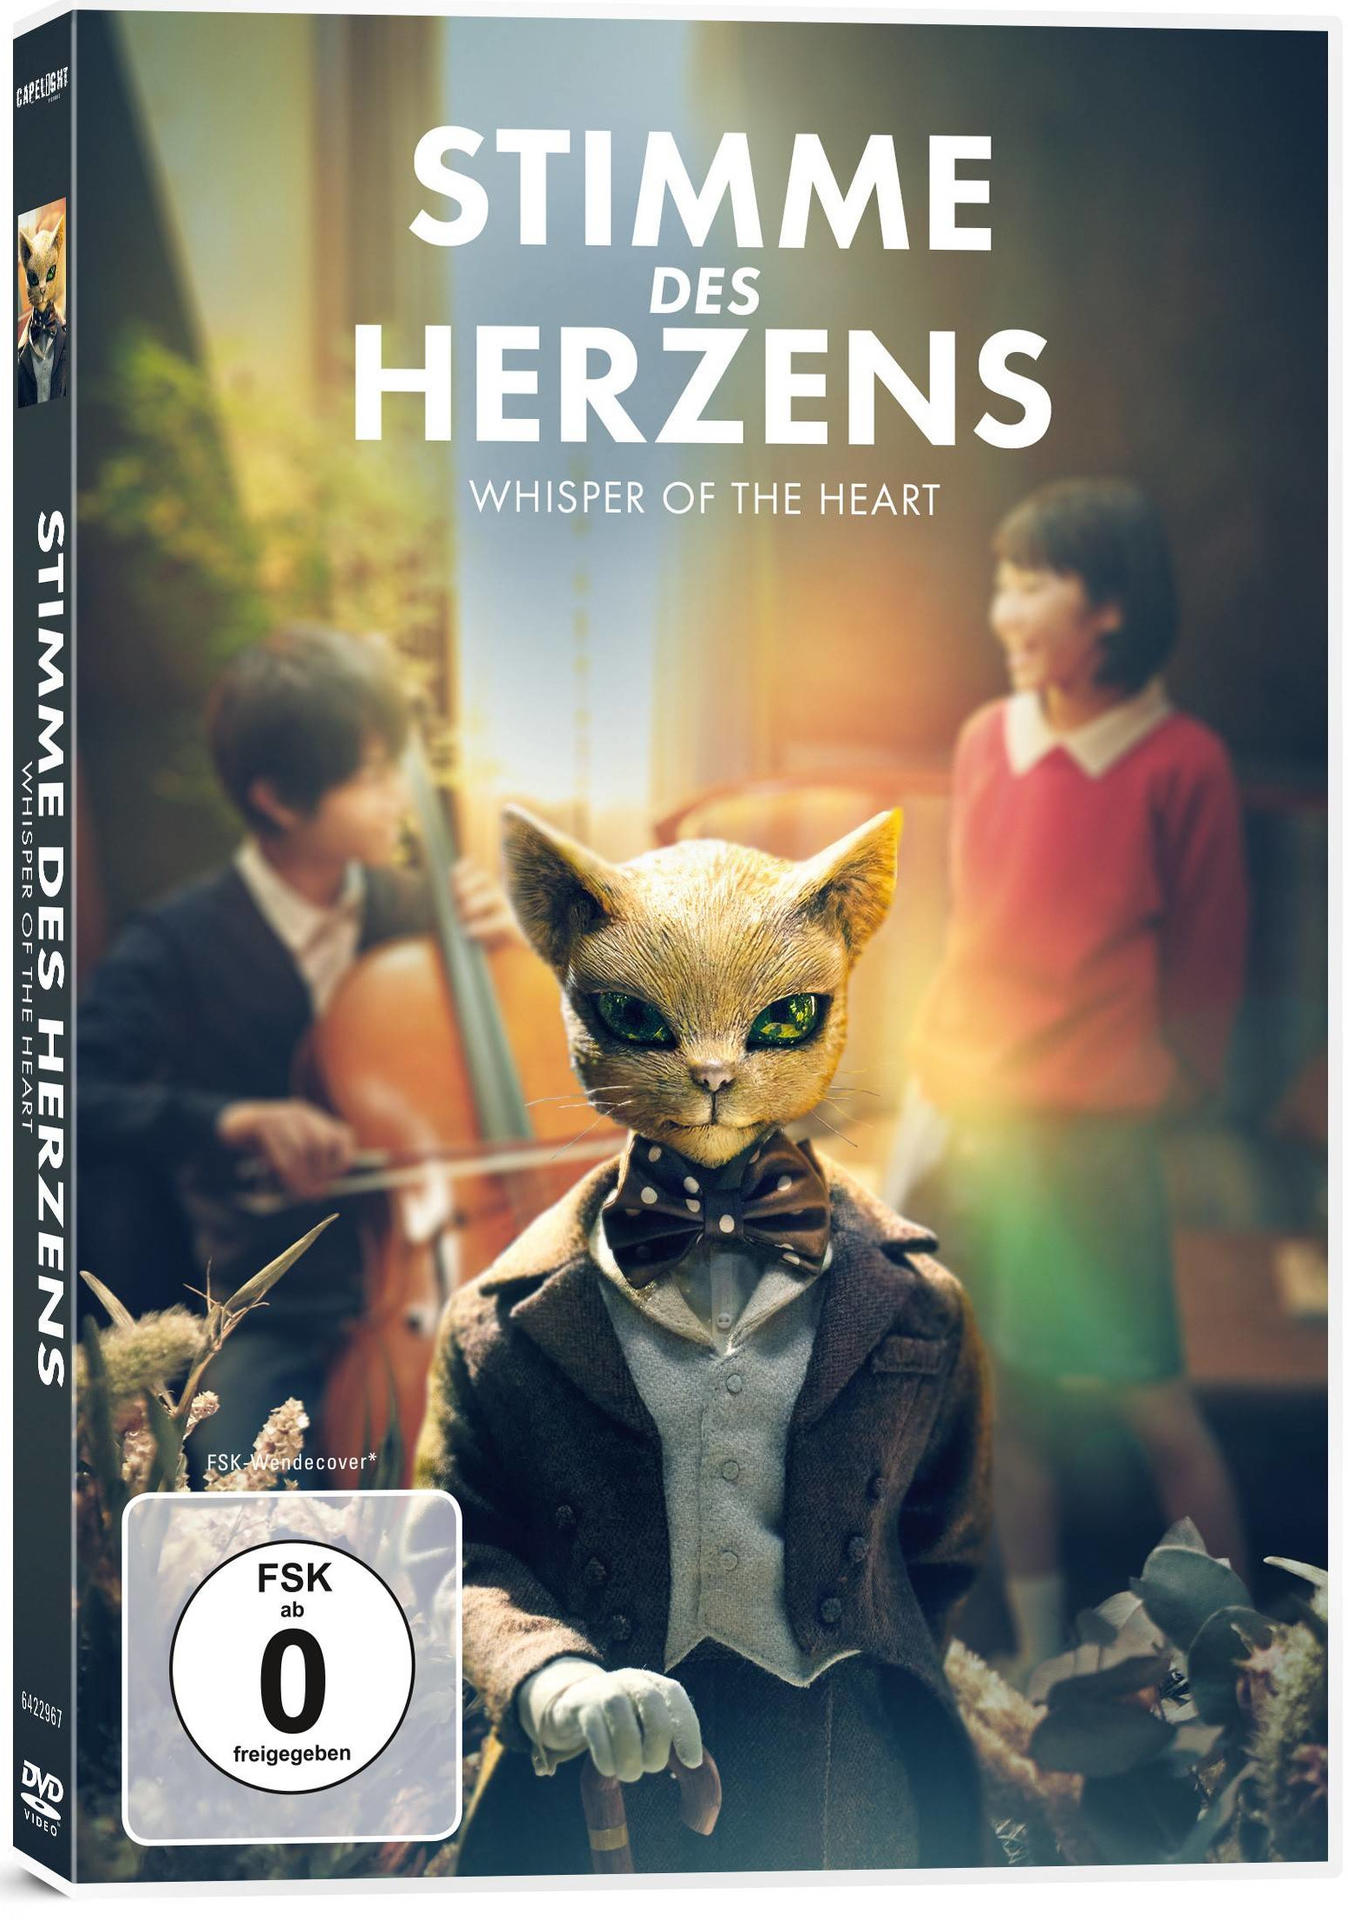 Stimme des Herzens - DVD of Heart Whisper the